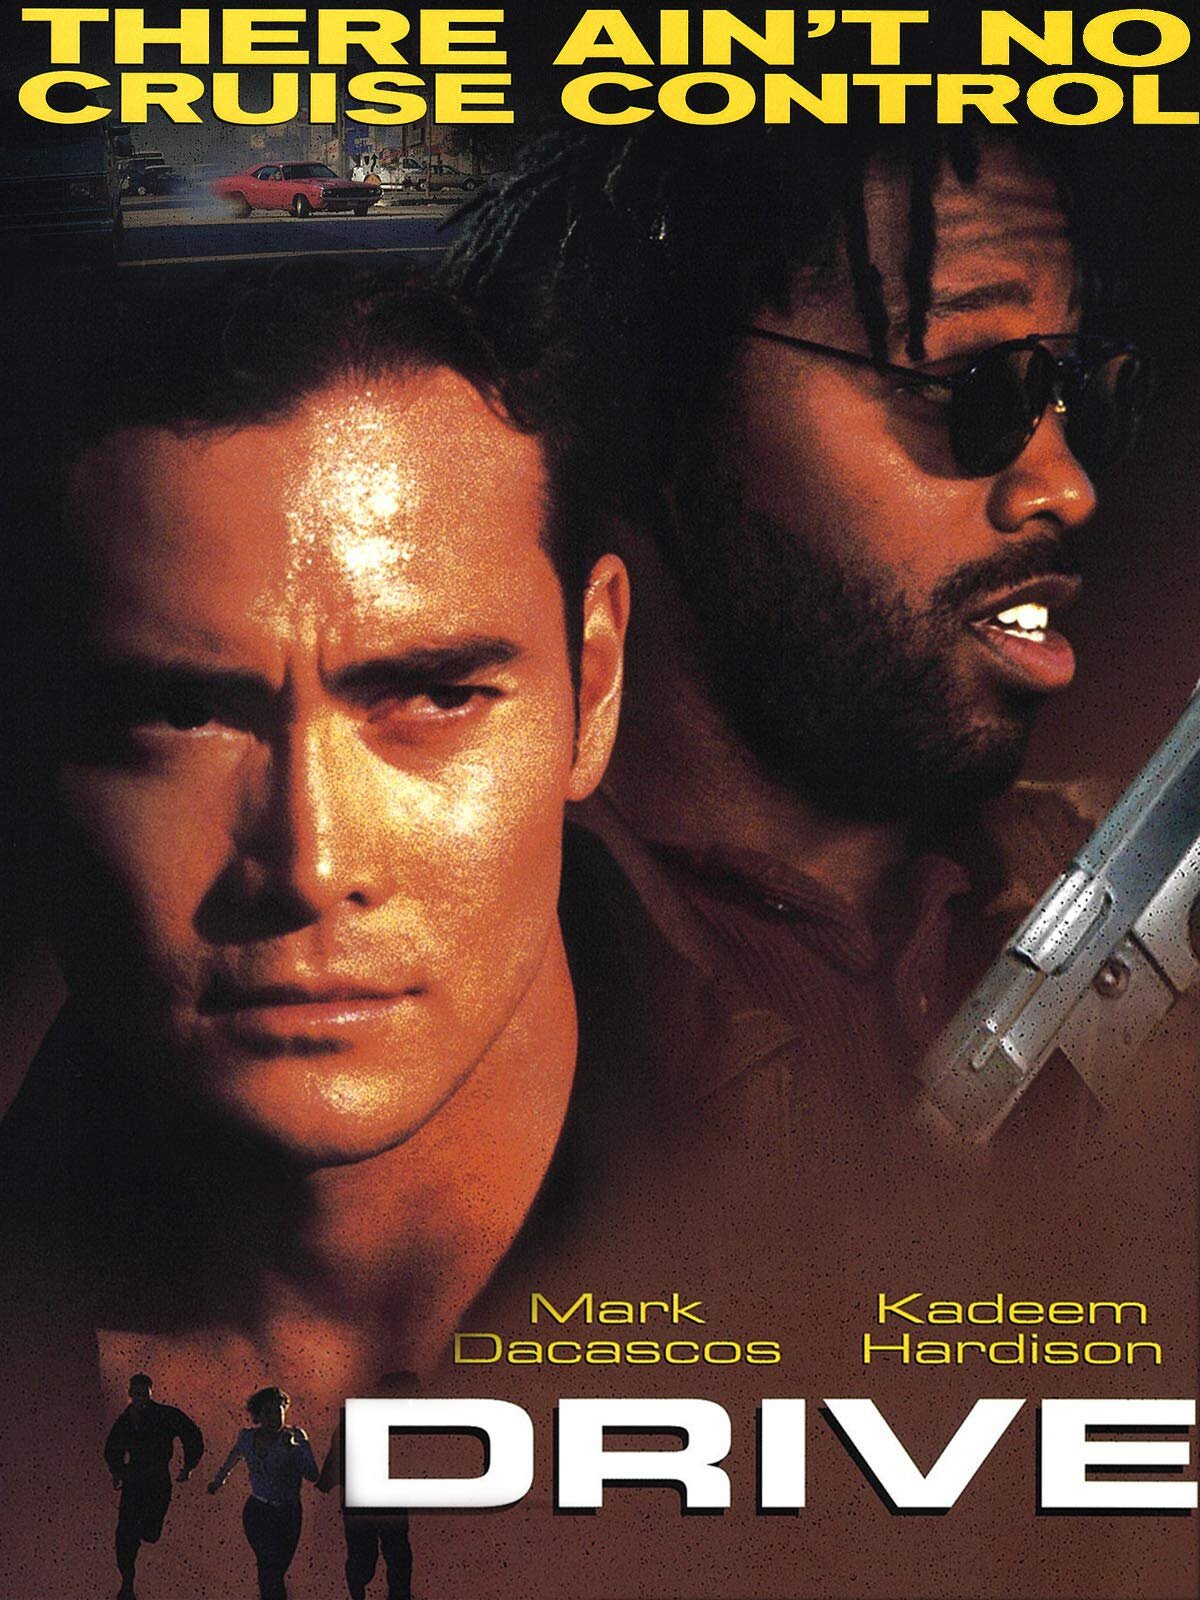 DRIVE (1997) Movie Poster 2.jpg